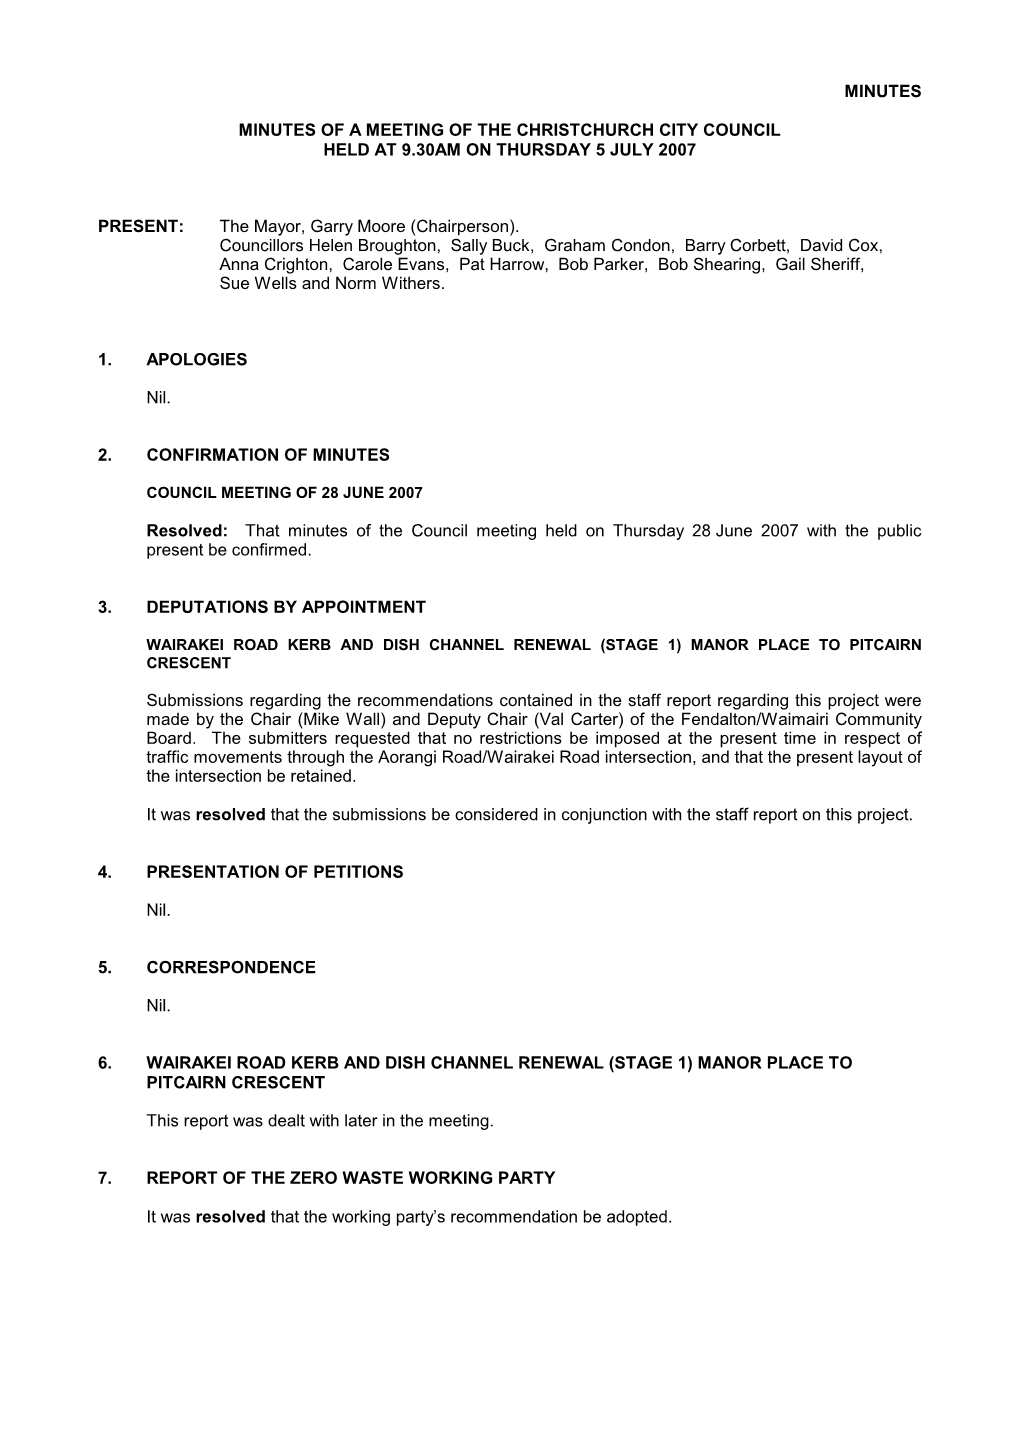 Council Agenda 12 July 2007